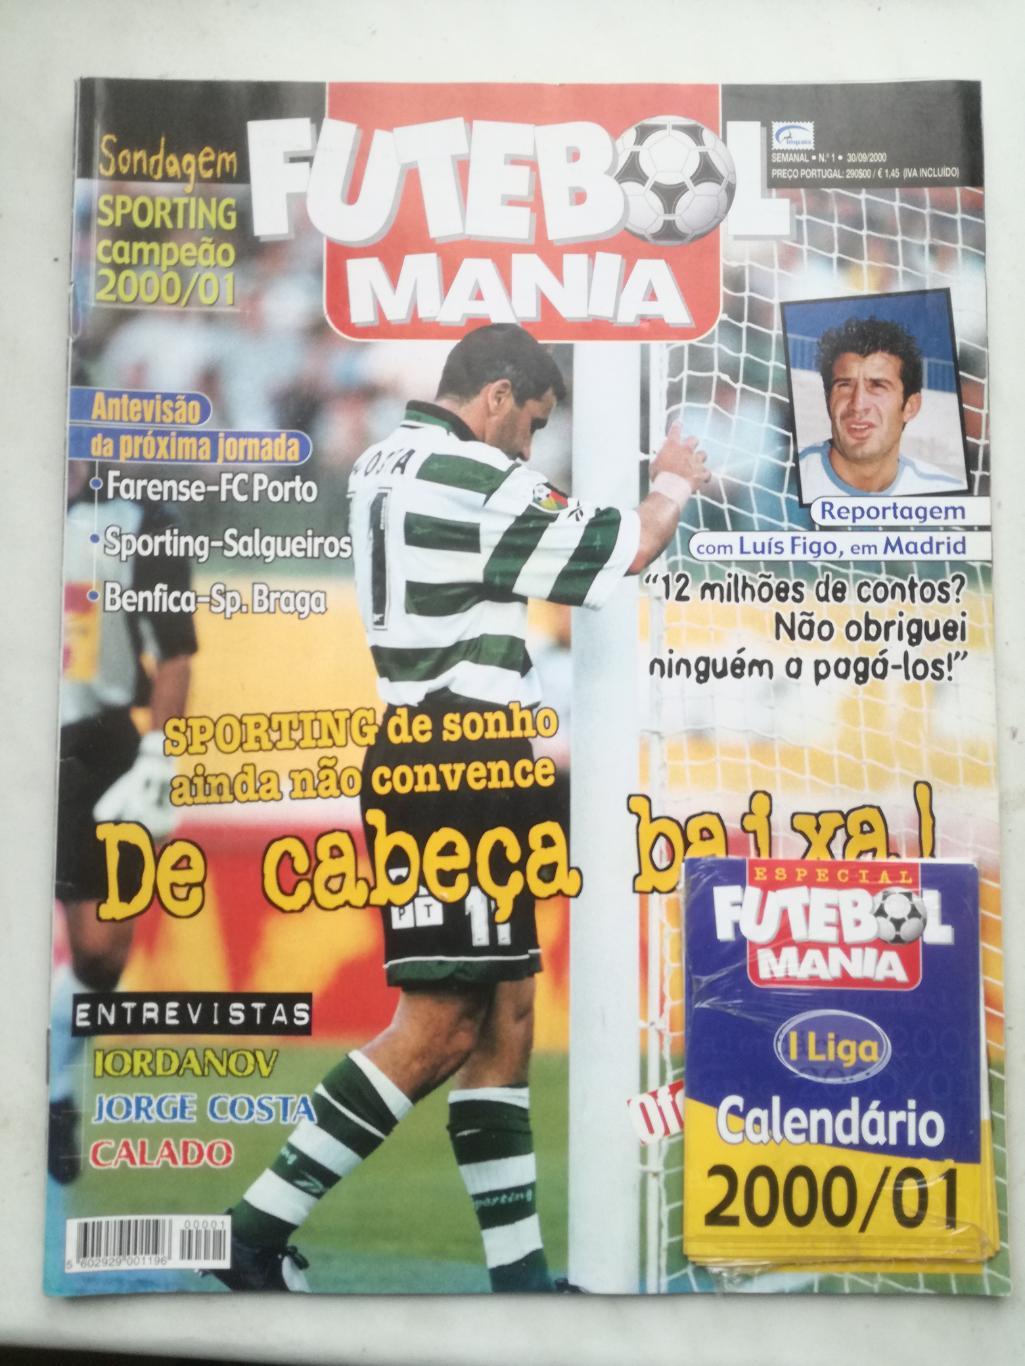 Журнал Футболмания (Португалия). Сентябрь 2000. Много фото